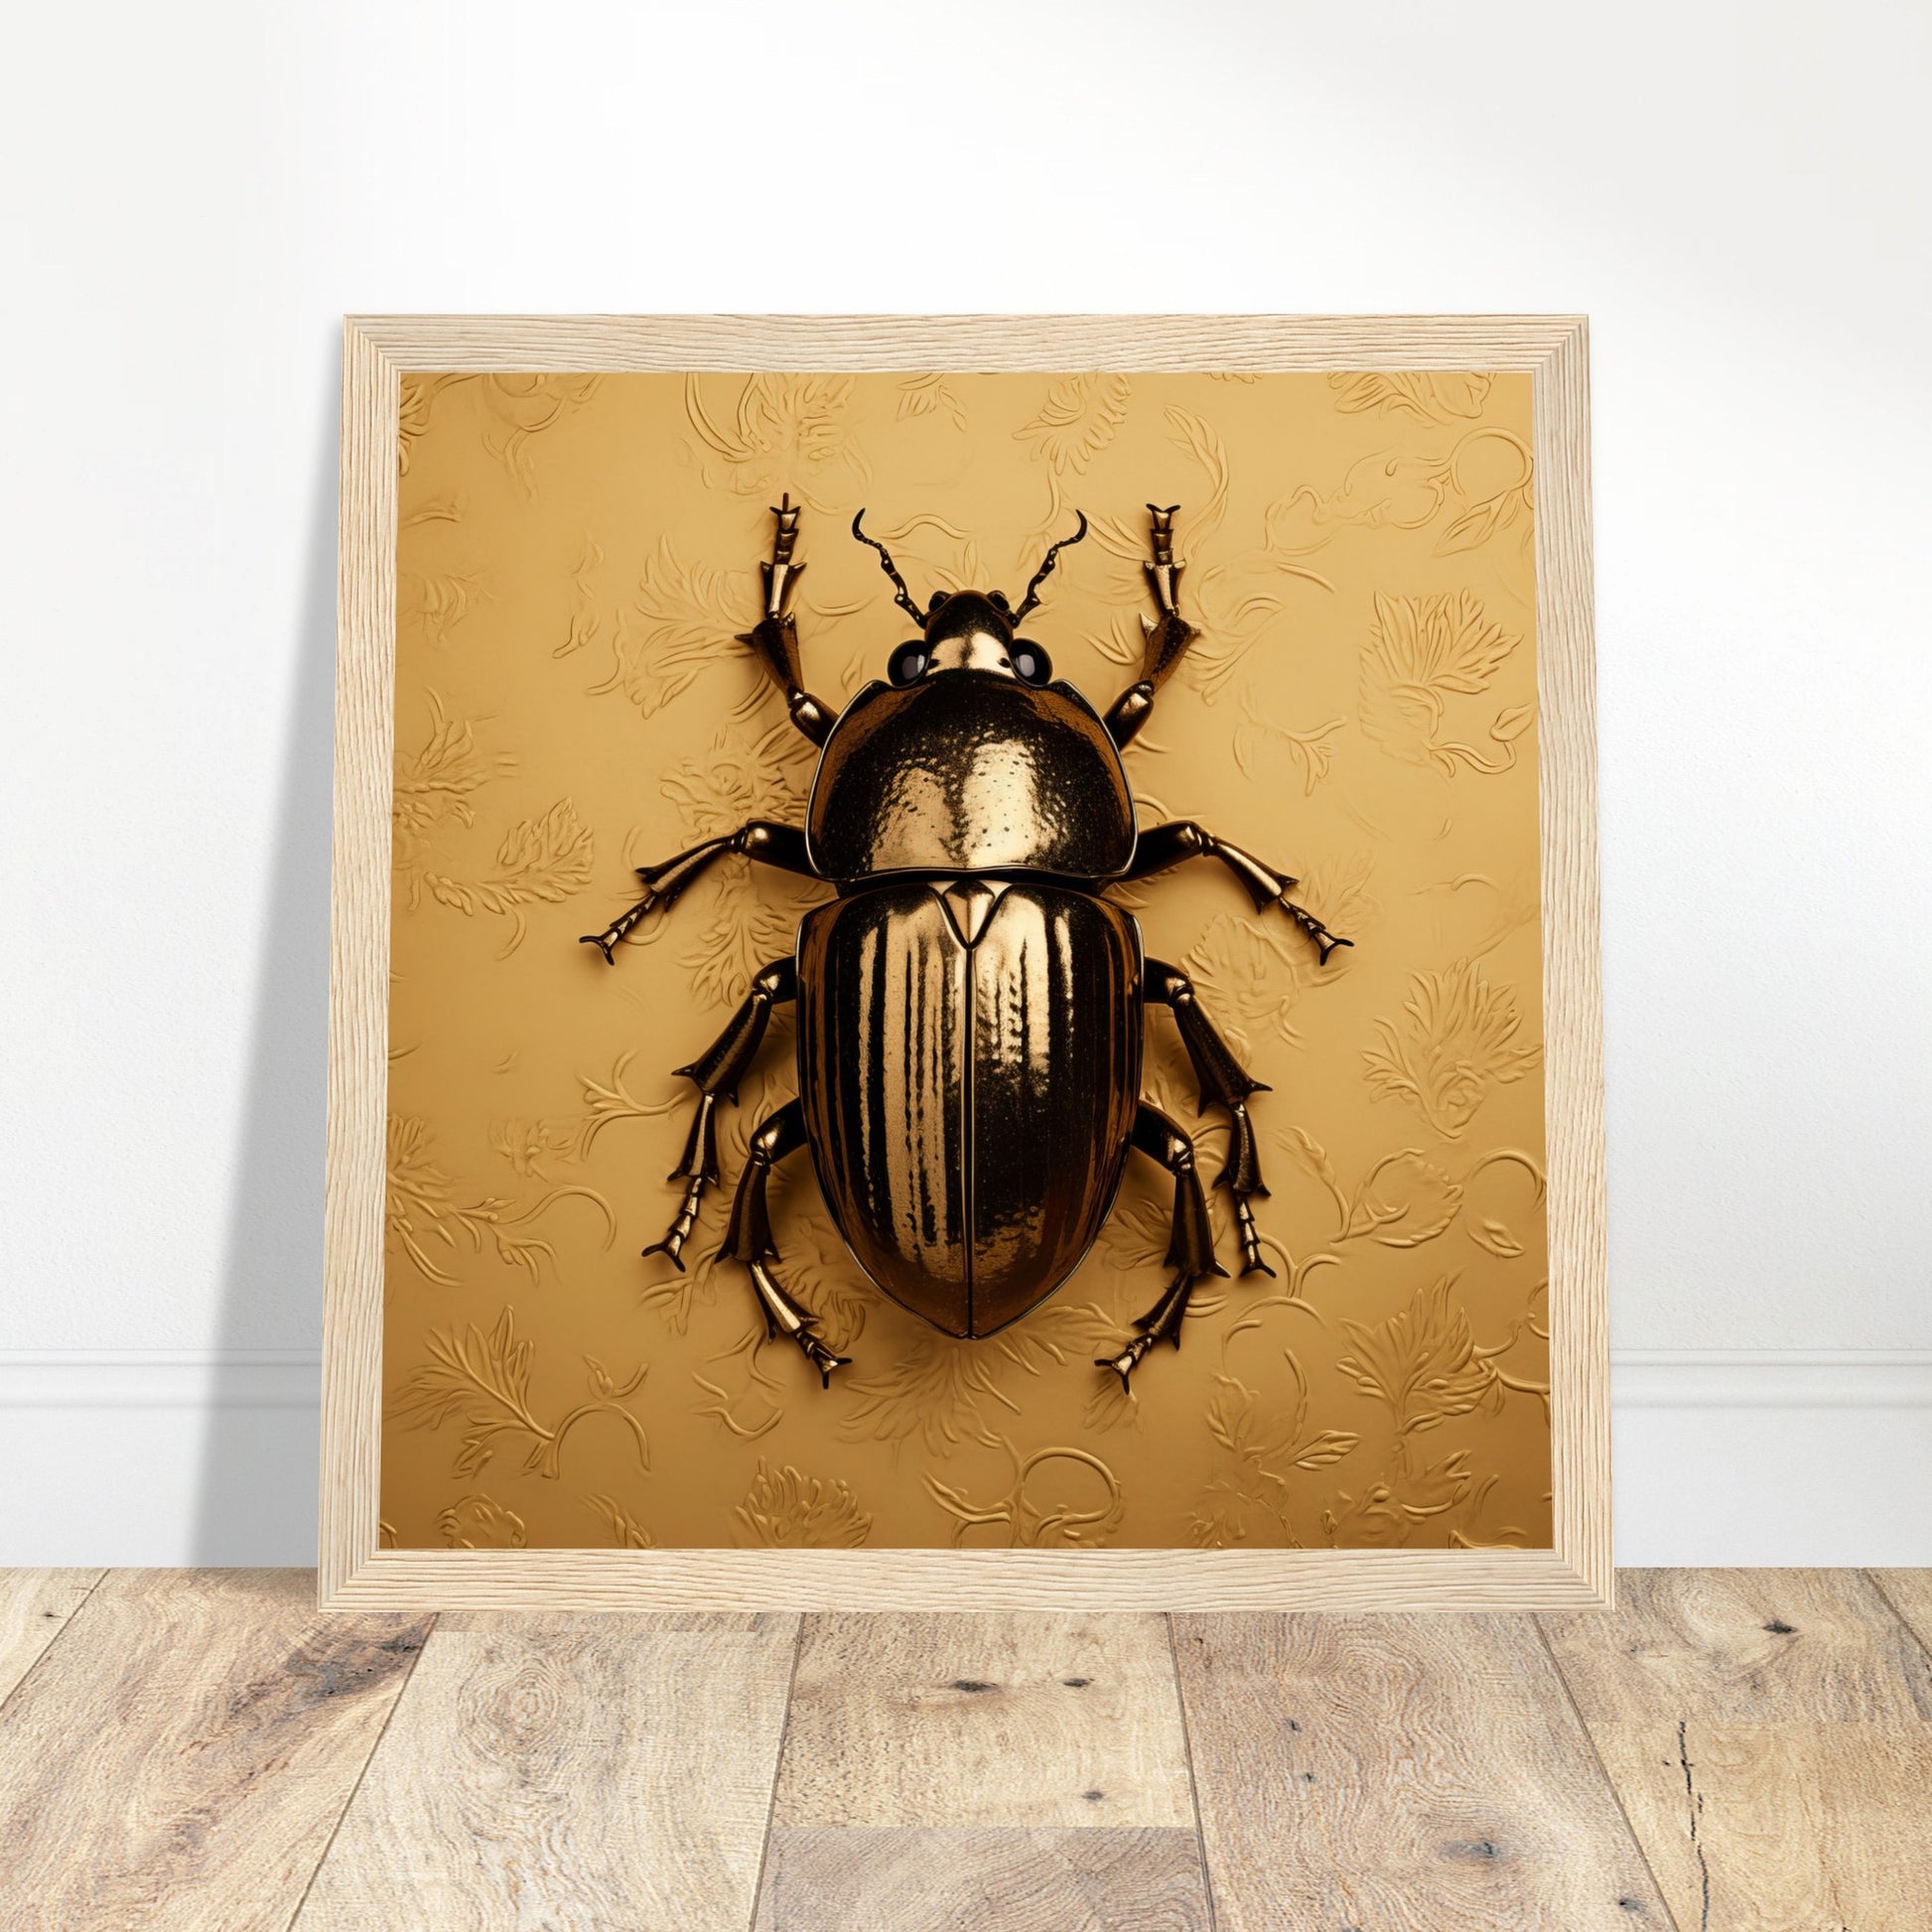 Golden Beetle Artwork - Print Room Ltd Wood frame 50x50 cm / 20x20"